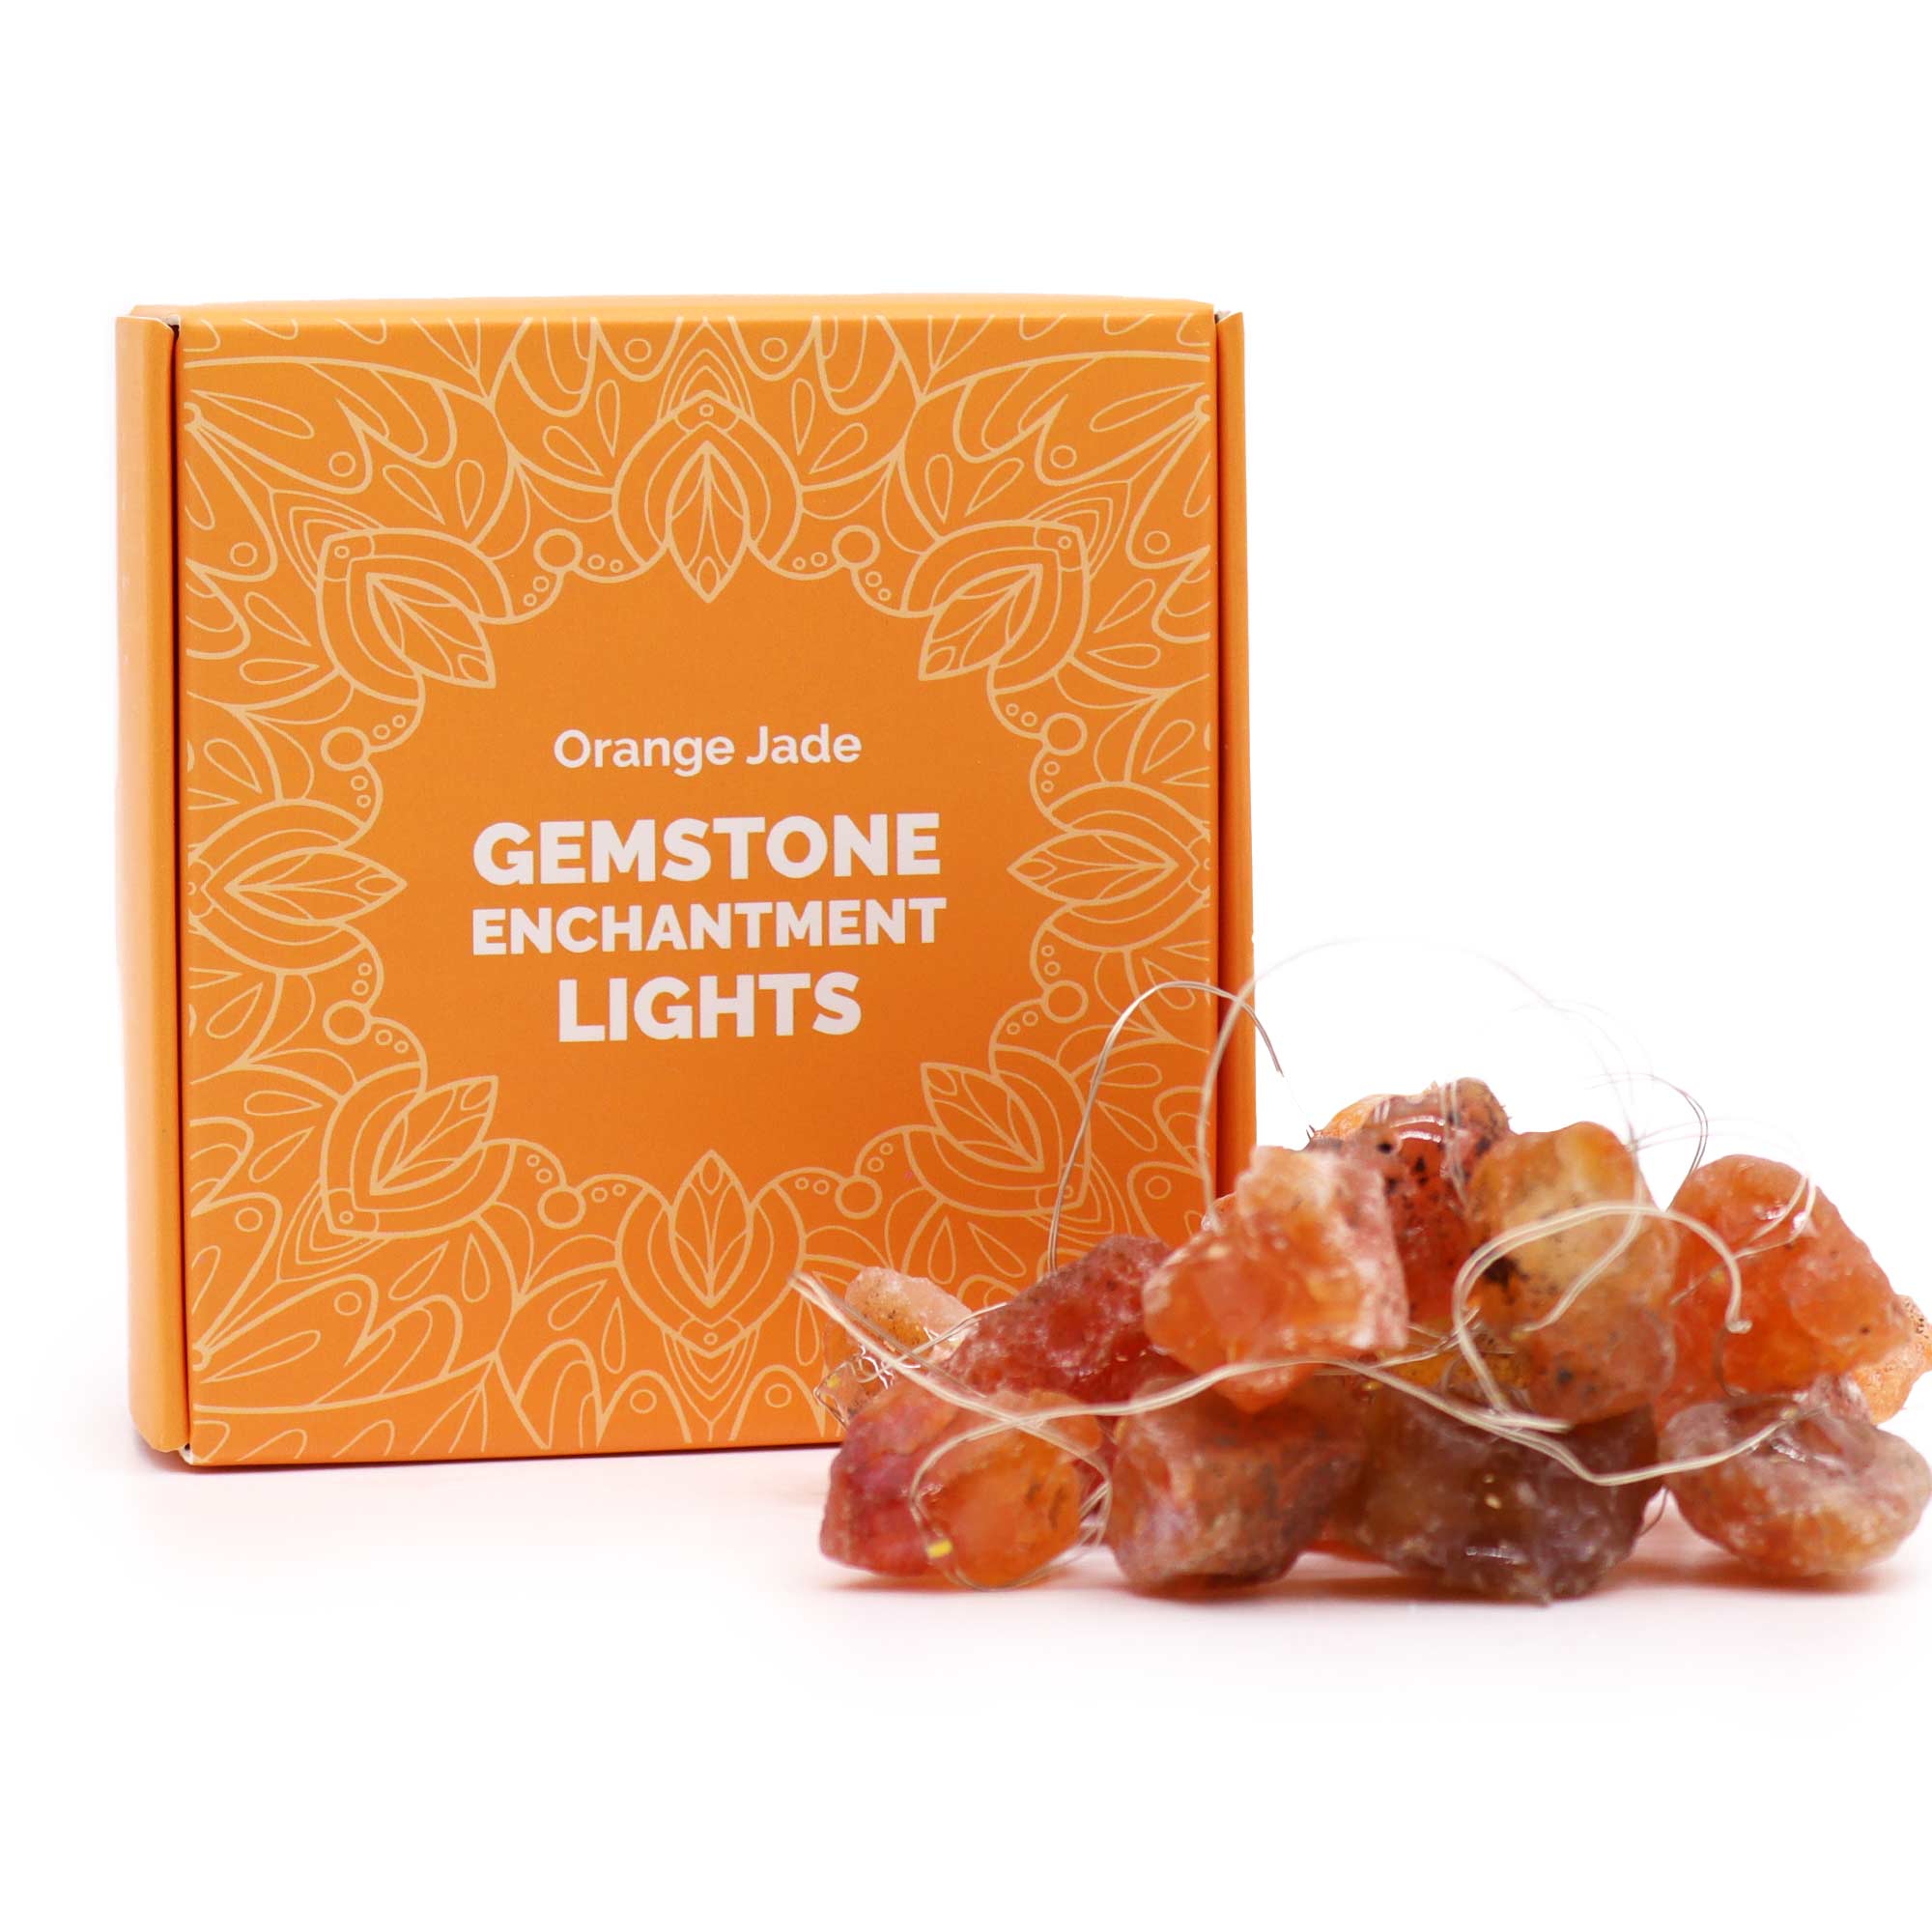 Gemstone Enchantment Lights - Orange Jade